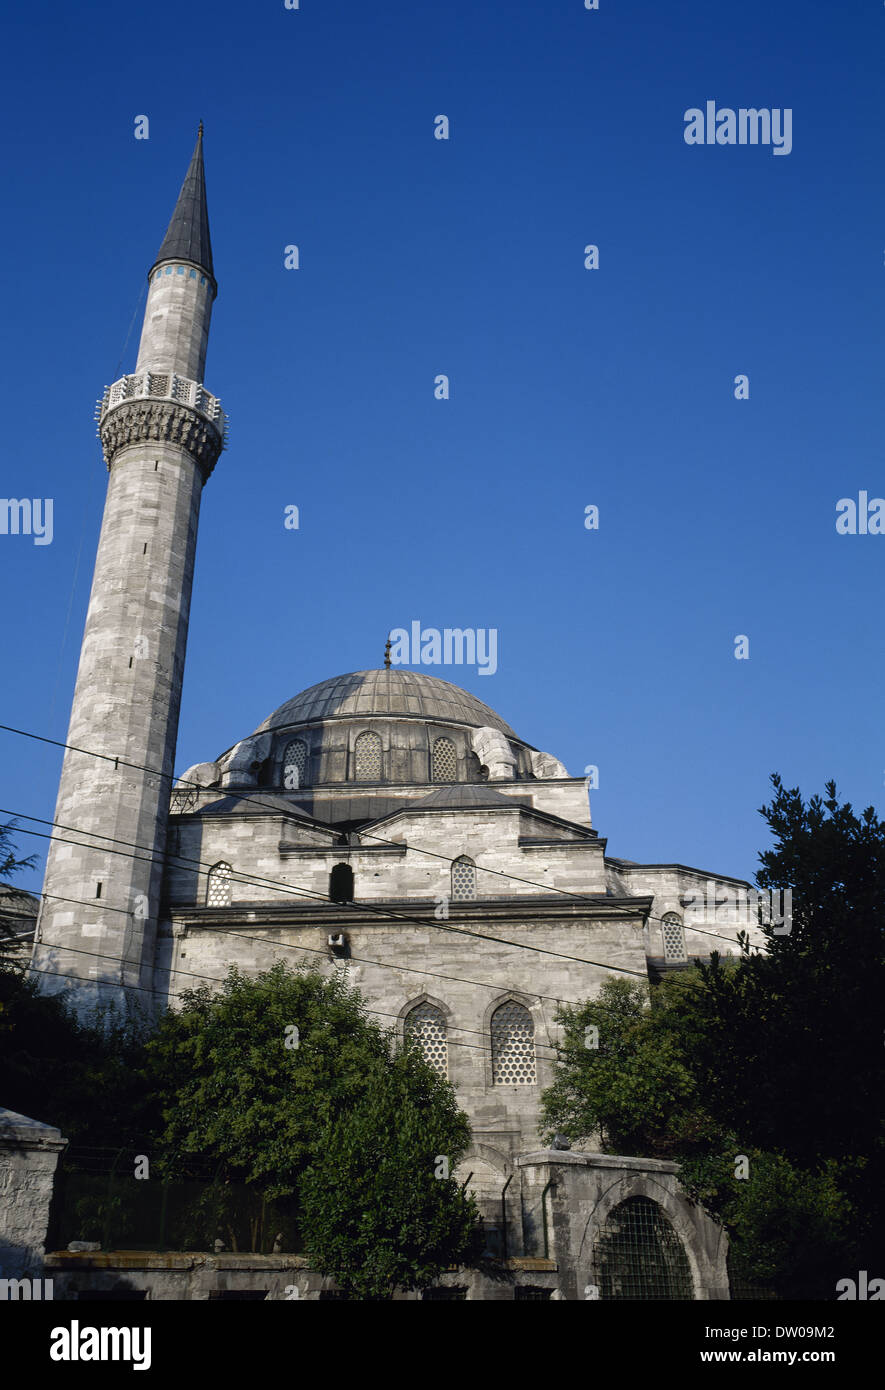 La Turchia. Istanbul. Atik Ali Pasha moschea. Moschea ottomana. Costruito dal Gran Visir Bosnalı Hadım Atik Ali Paşa nel 1496. Esterno. Foto Stock